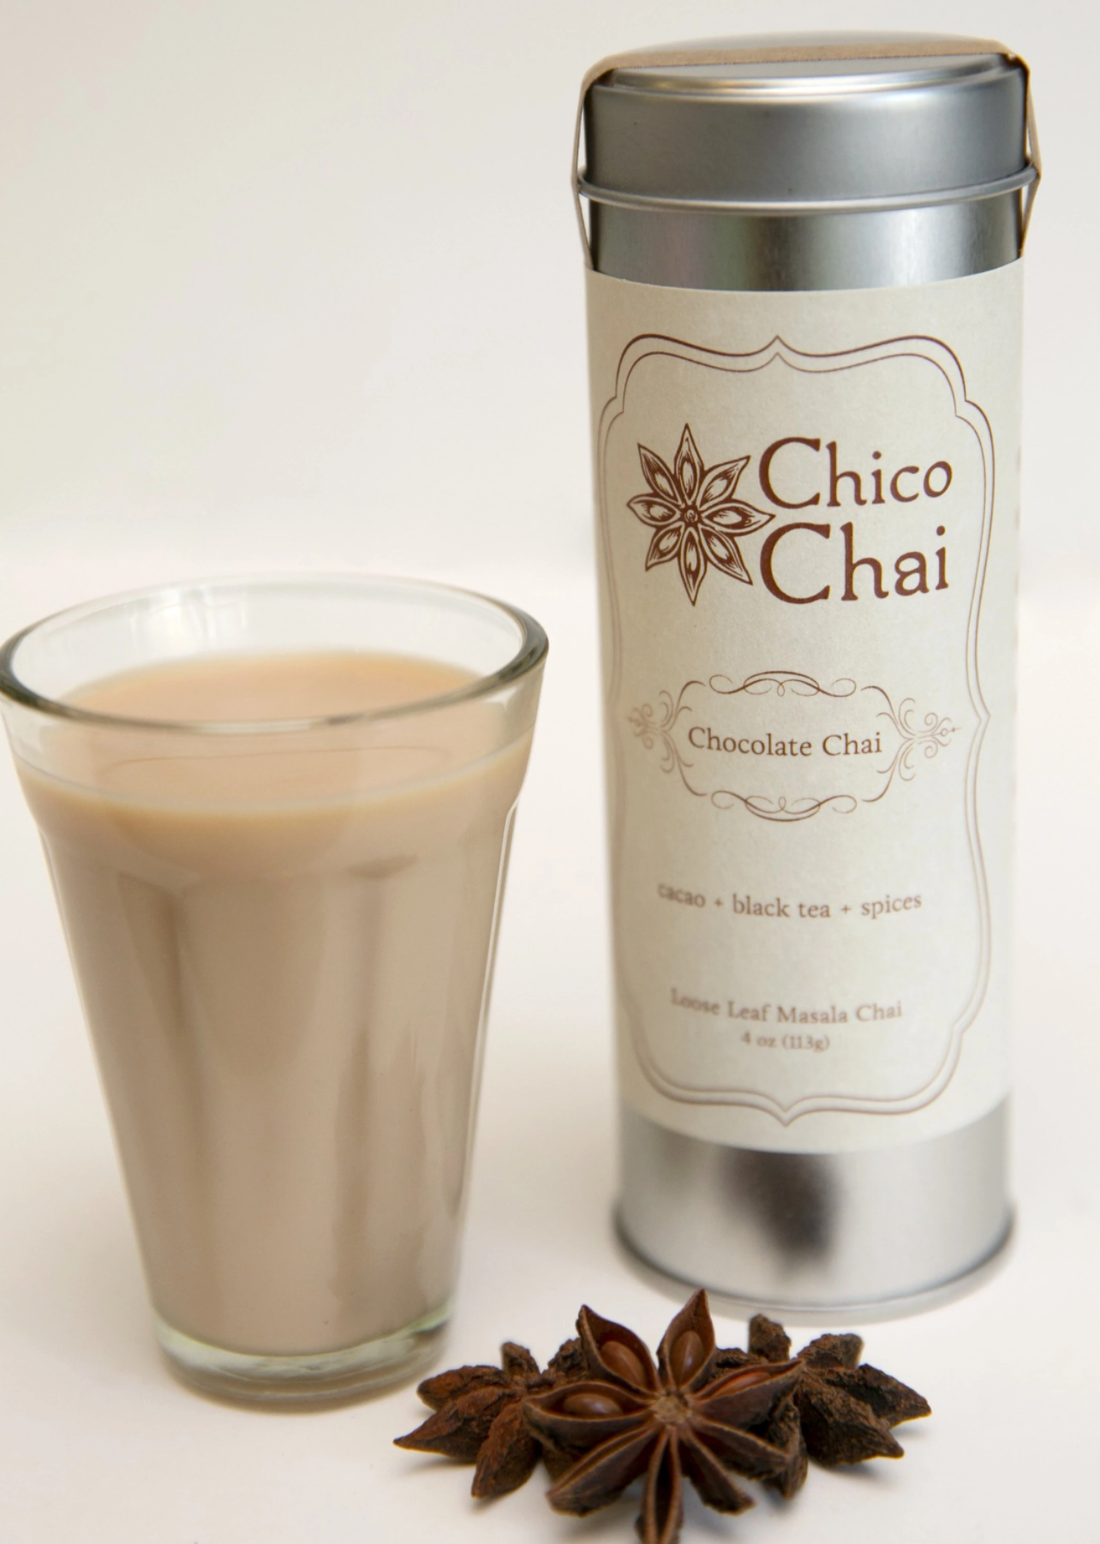 Chico Chai - Chocolate Chai